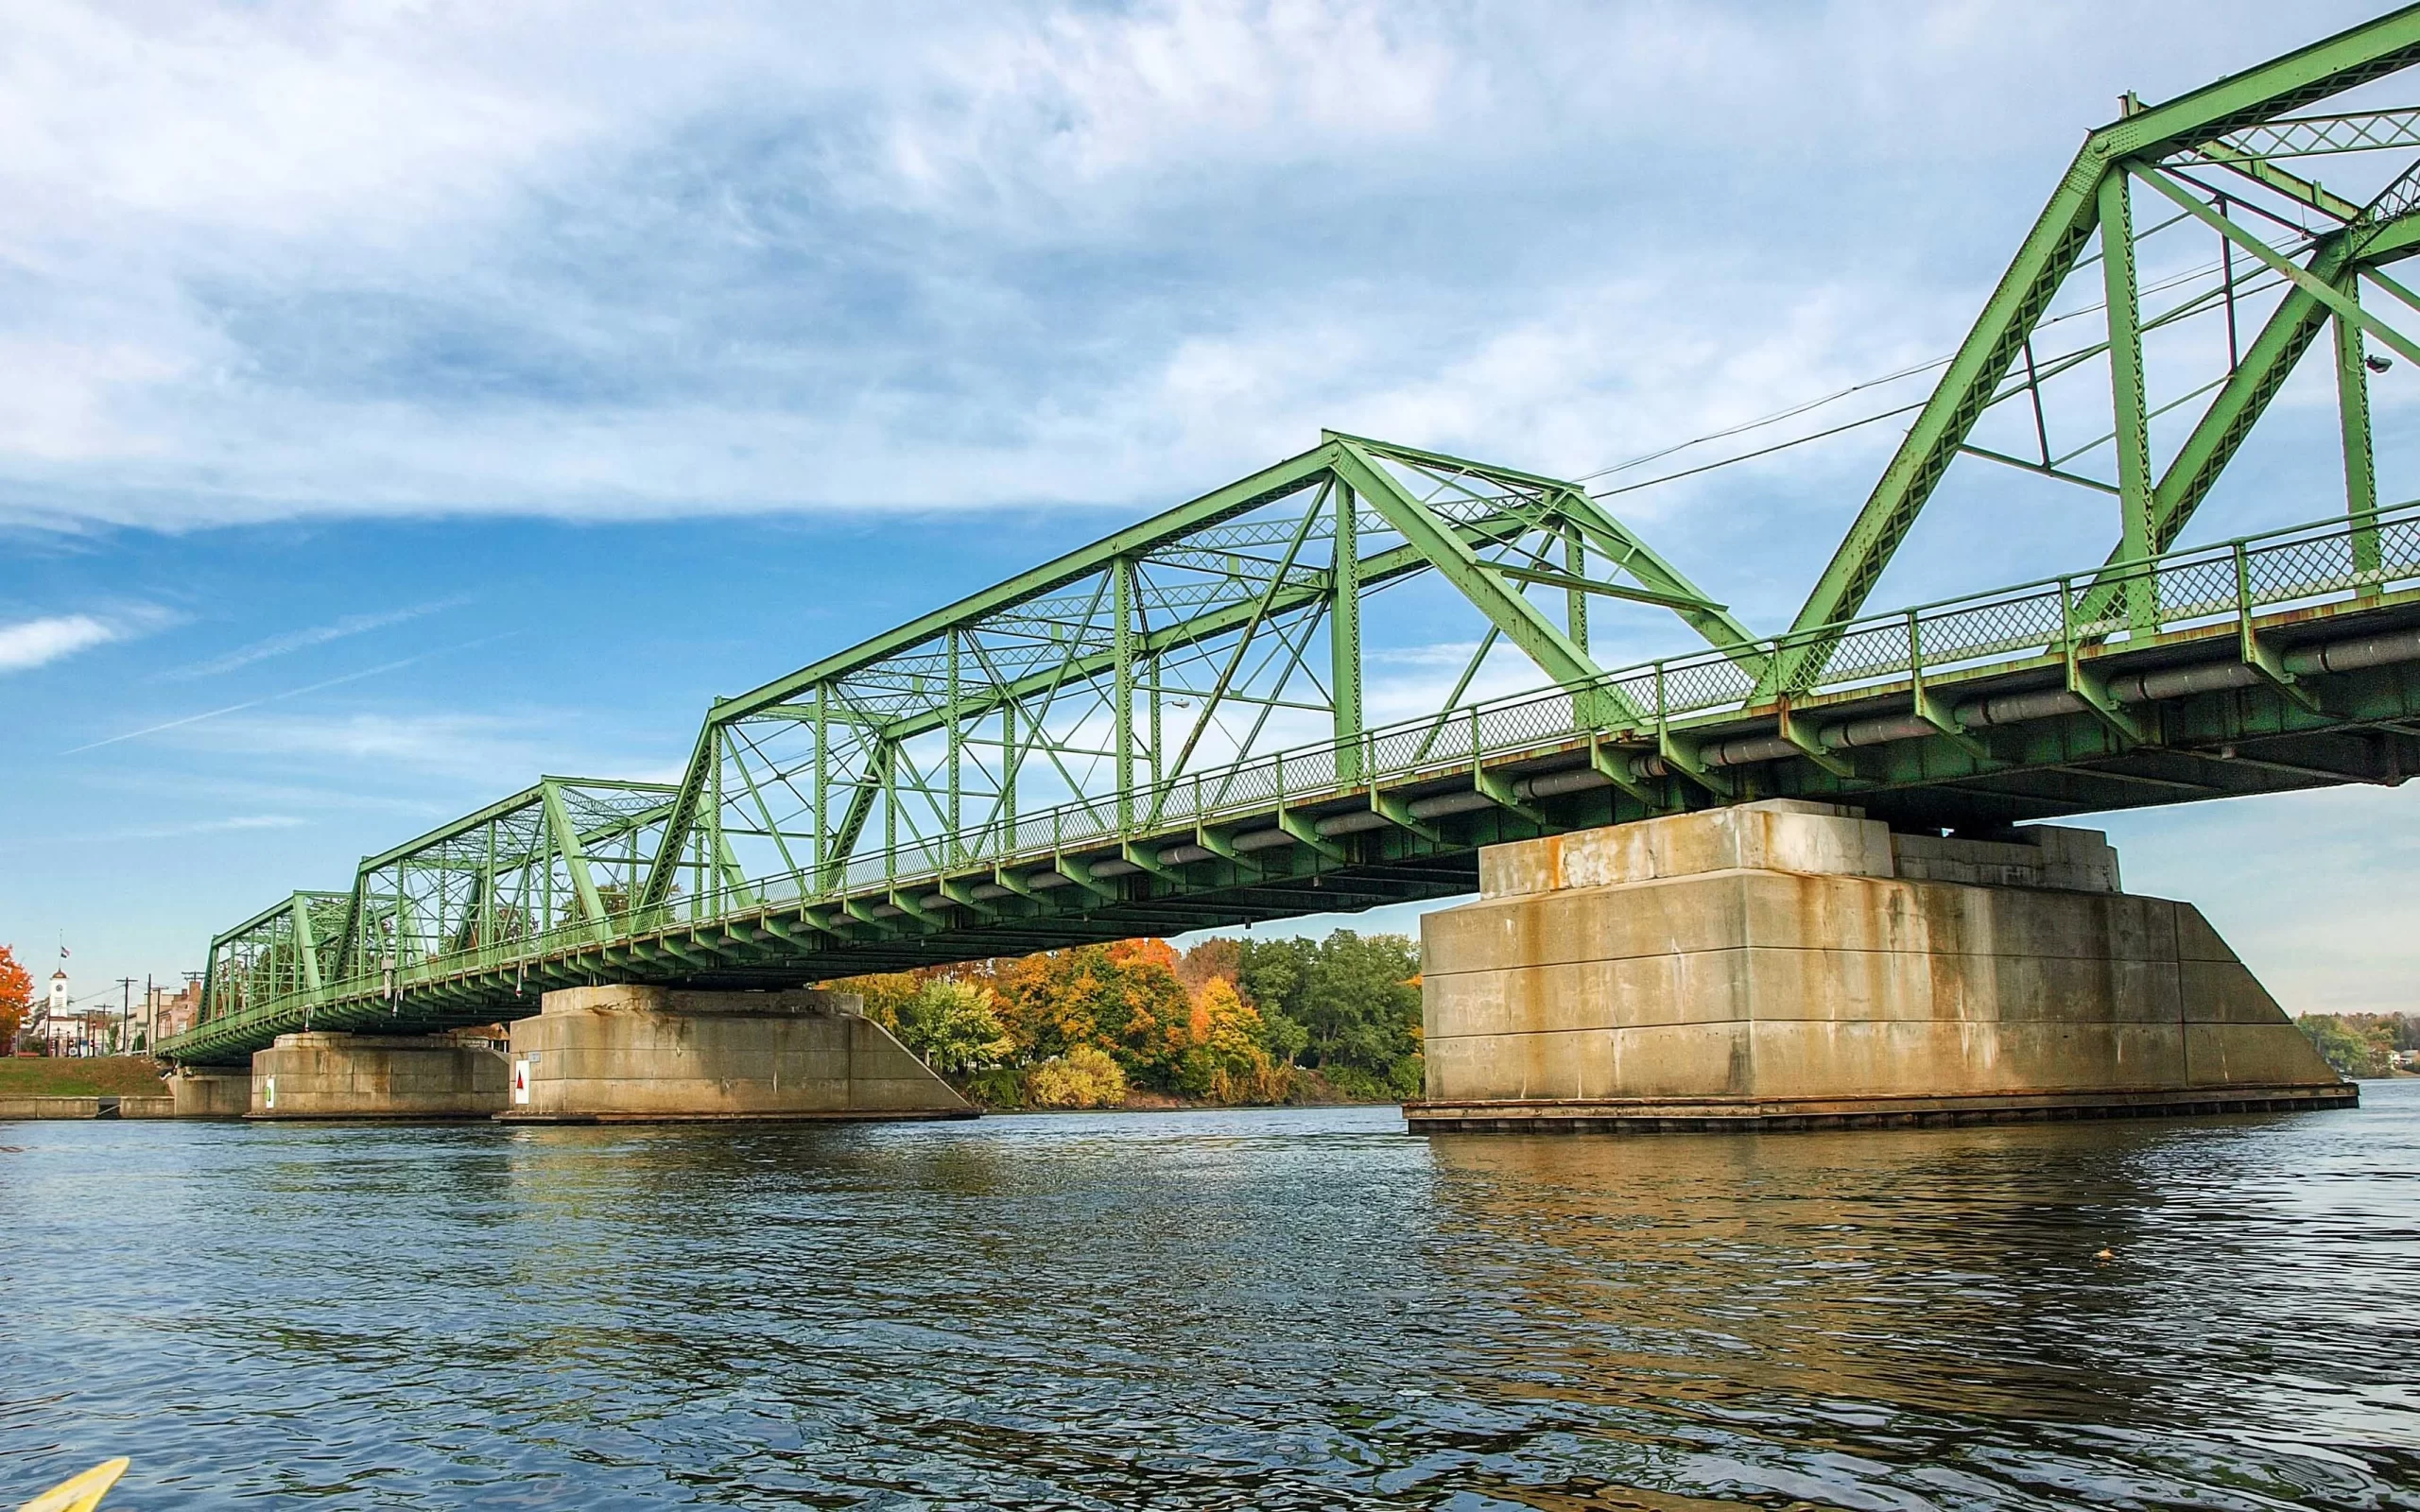 Union Bridge, Waterford, and Lansingburgh, New York